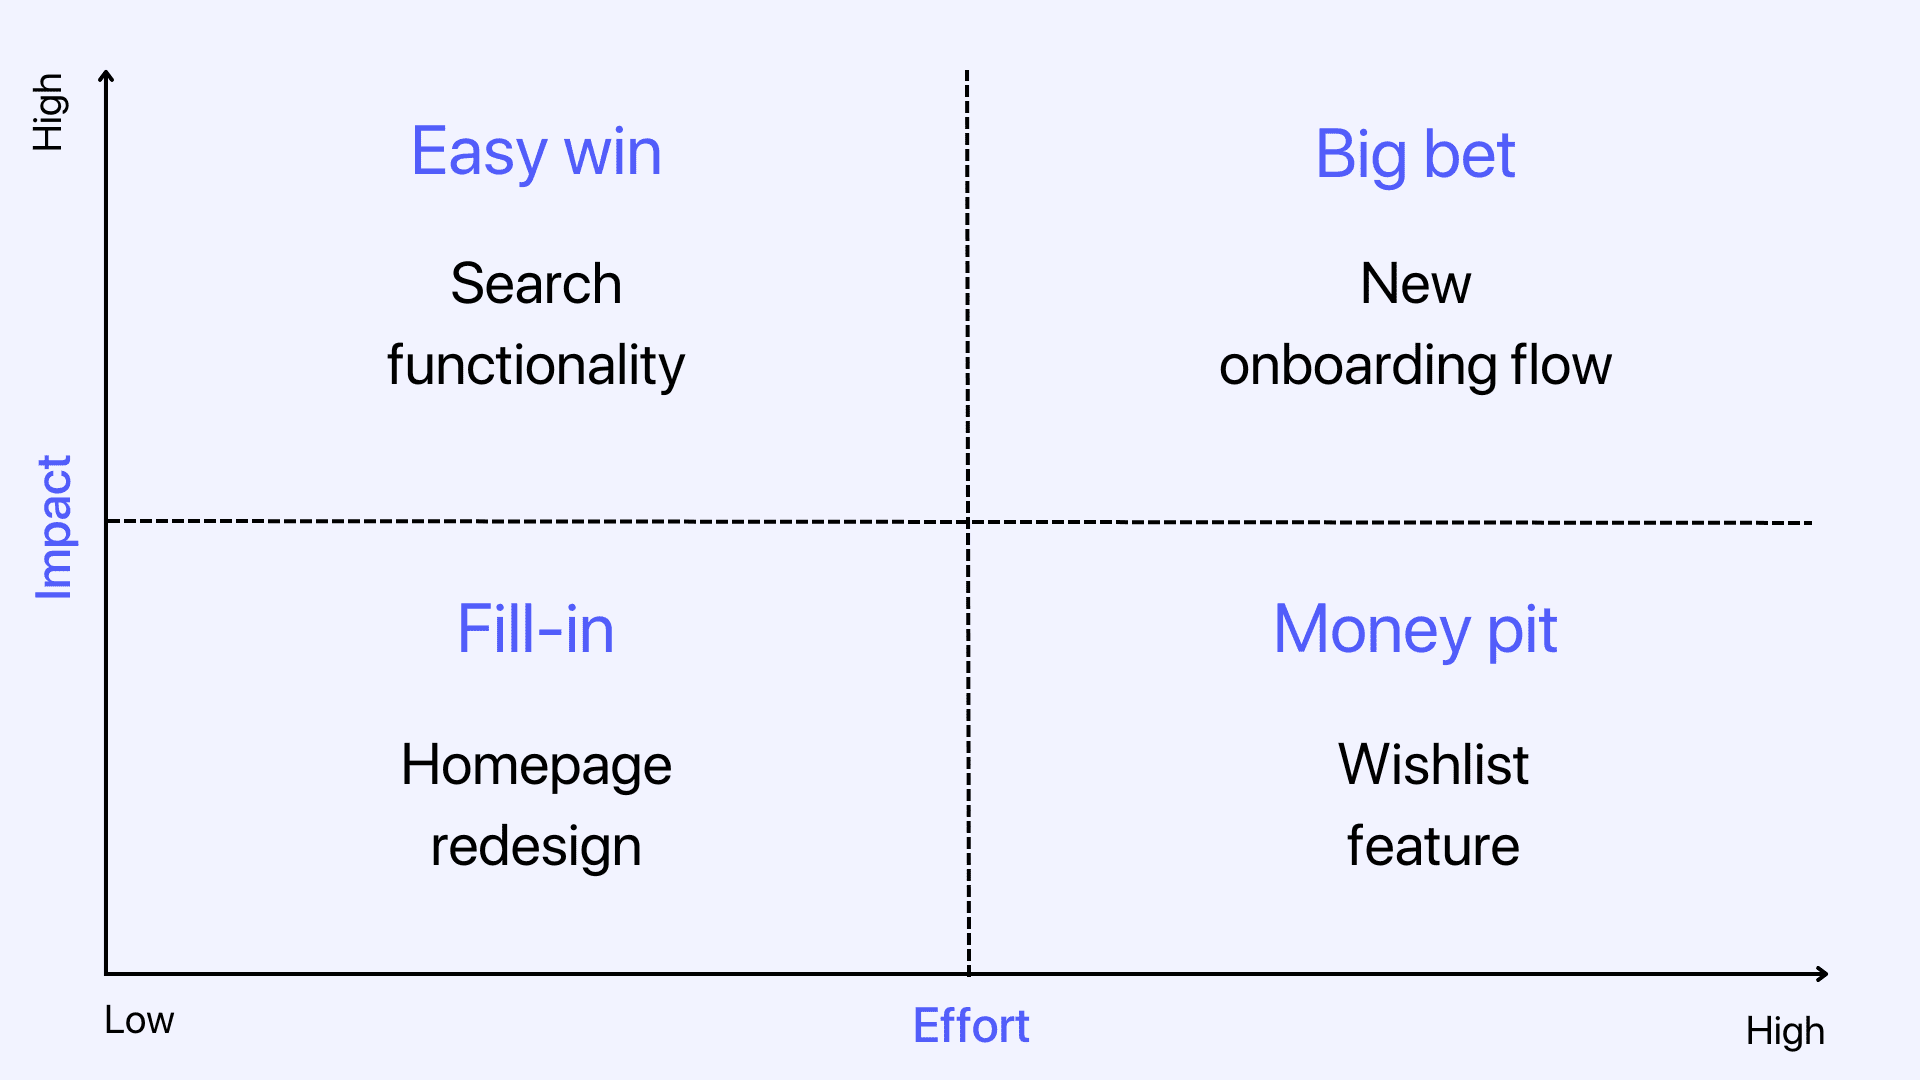 Impact–Effort matrix example 2